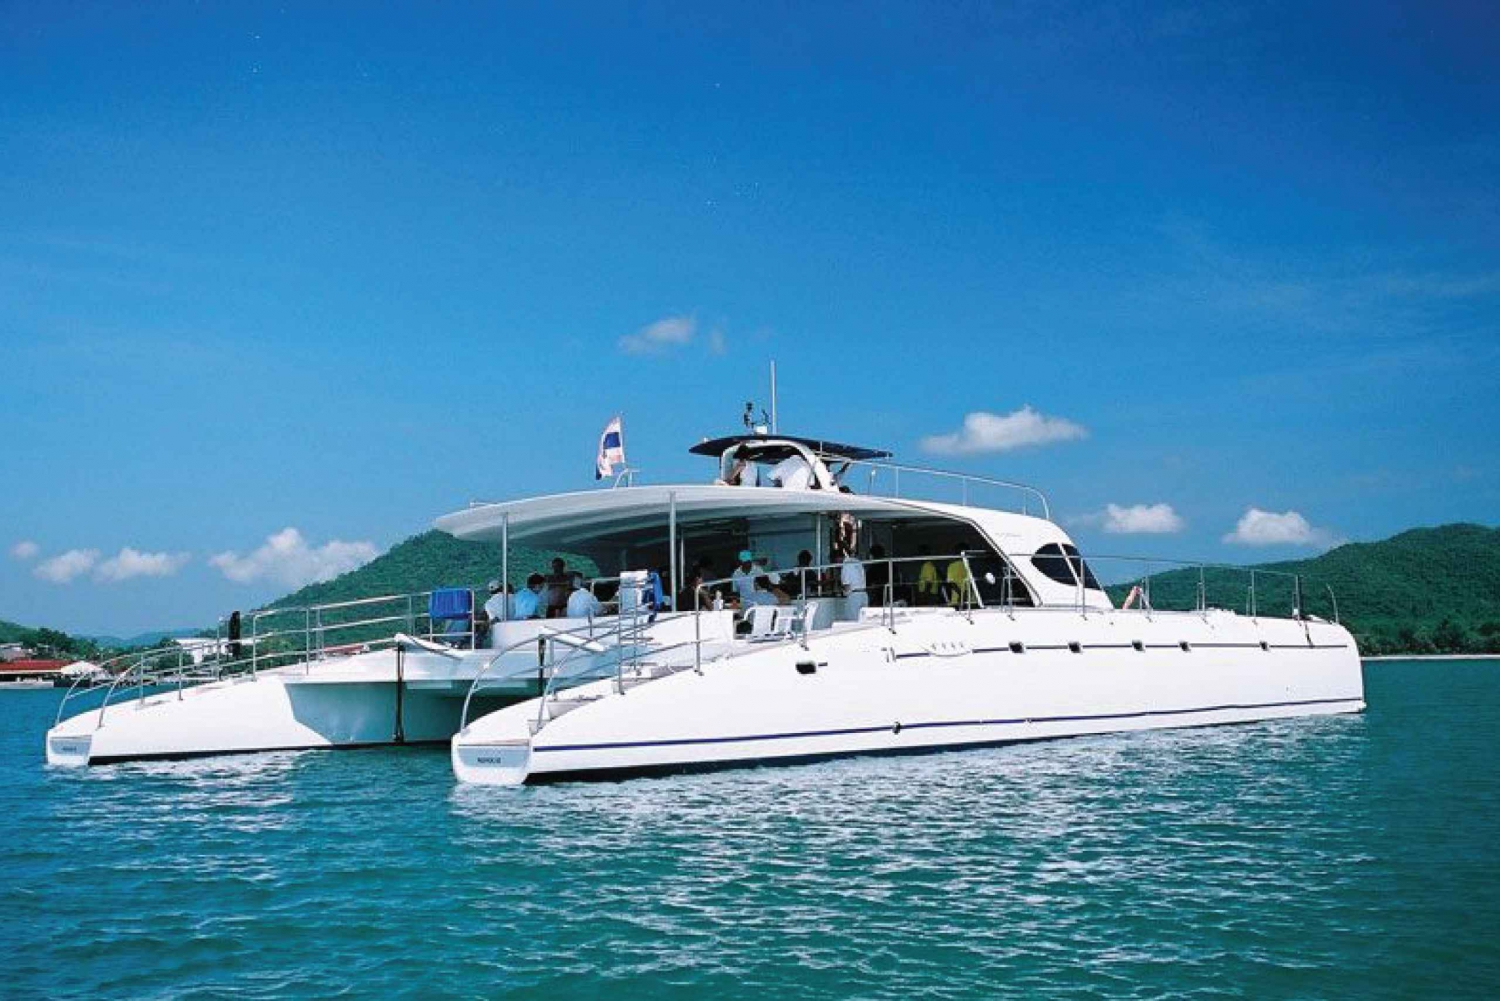 Pattaya: Full-Day 3 Island Tour on Catamaran with Lunch